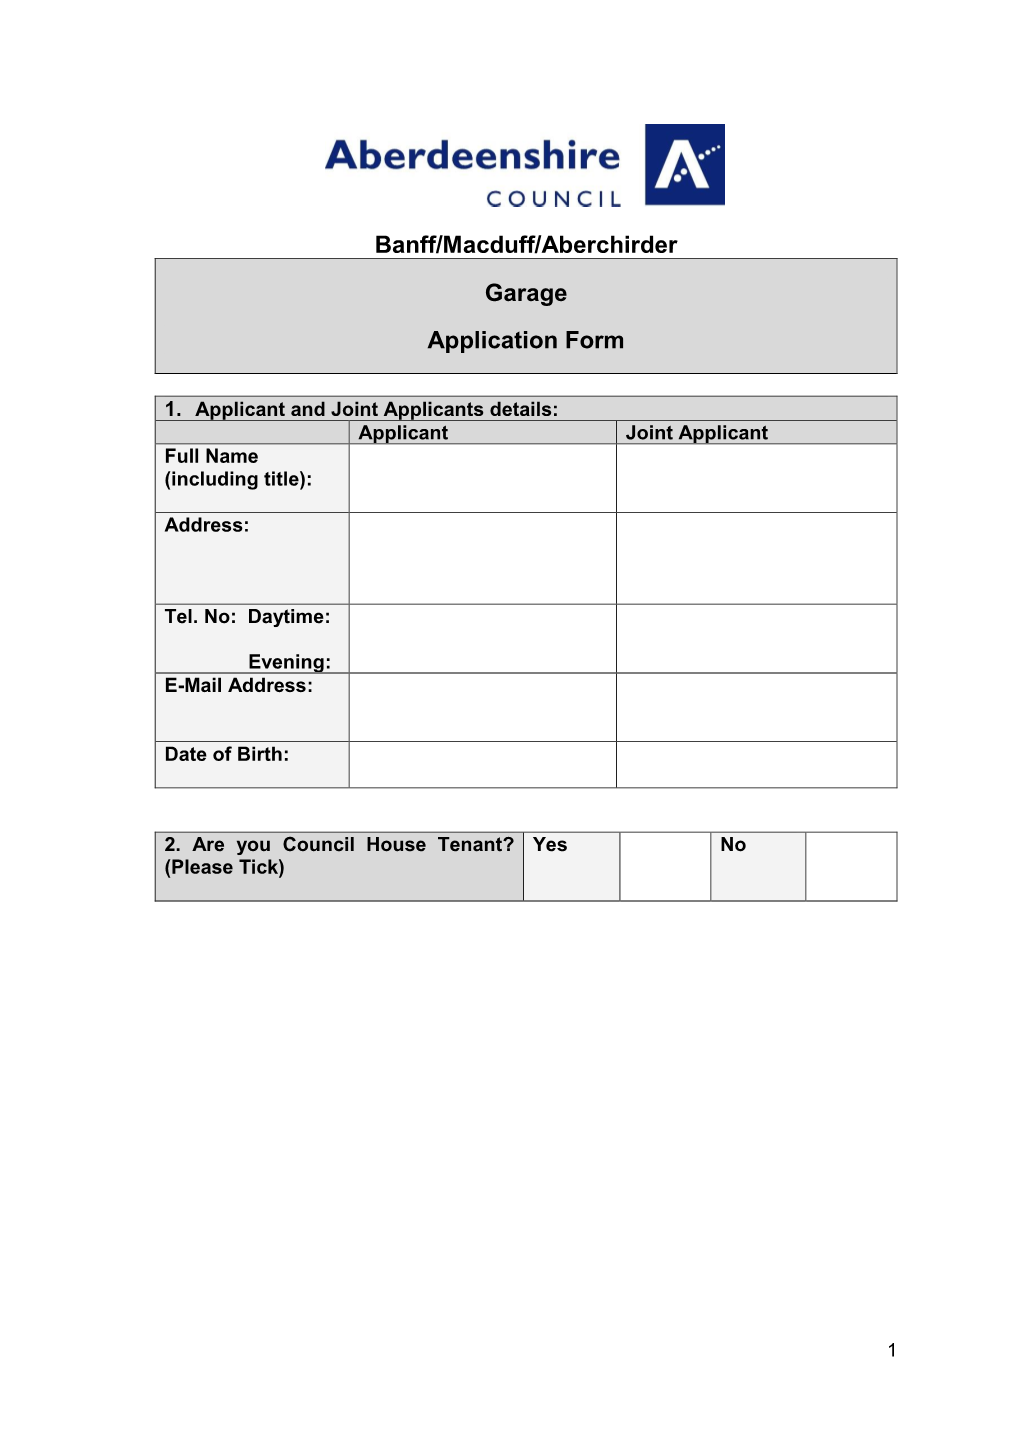 Banff/Macduff/Aberchirder Garage Application Form